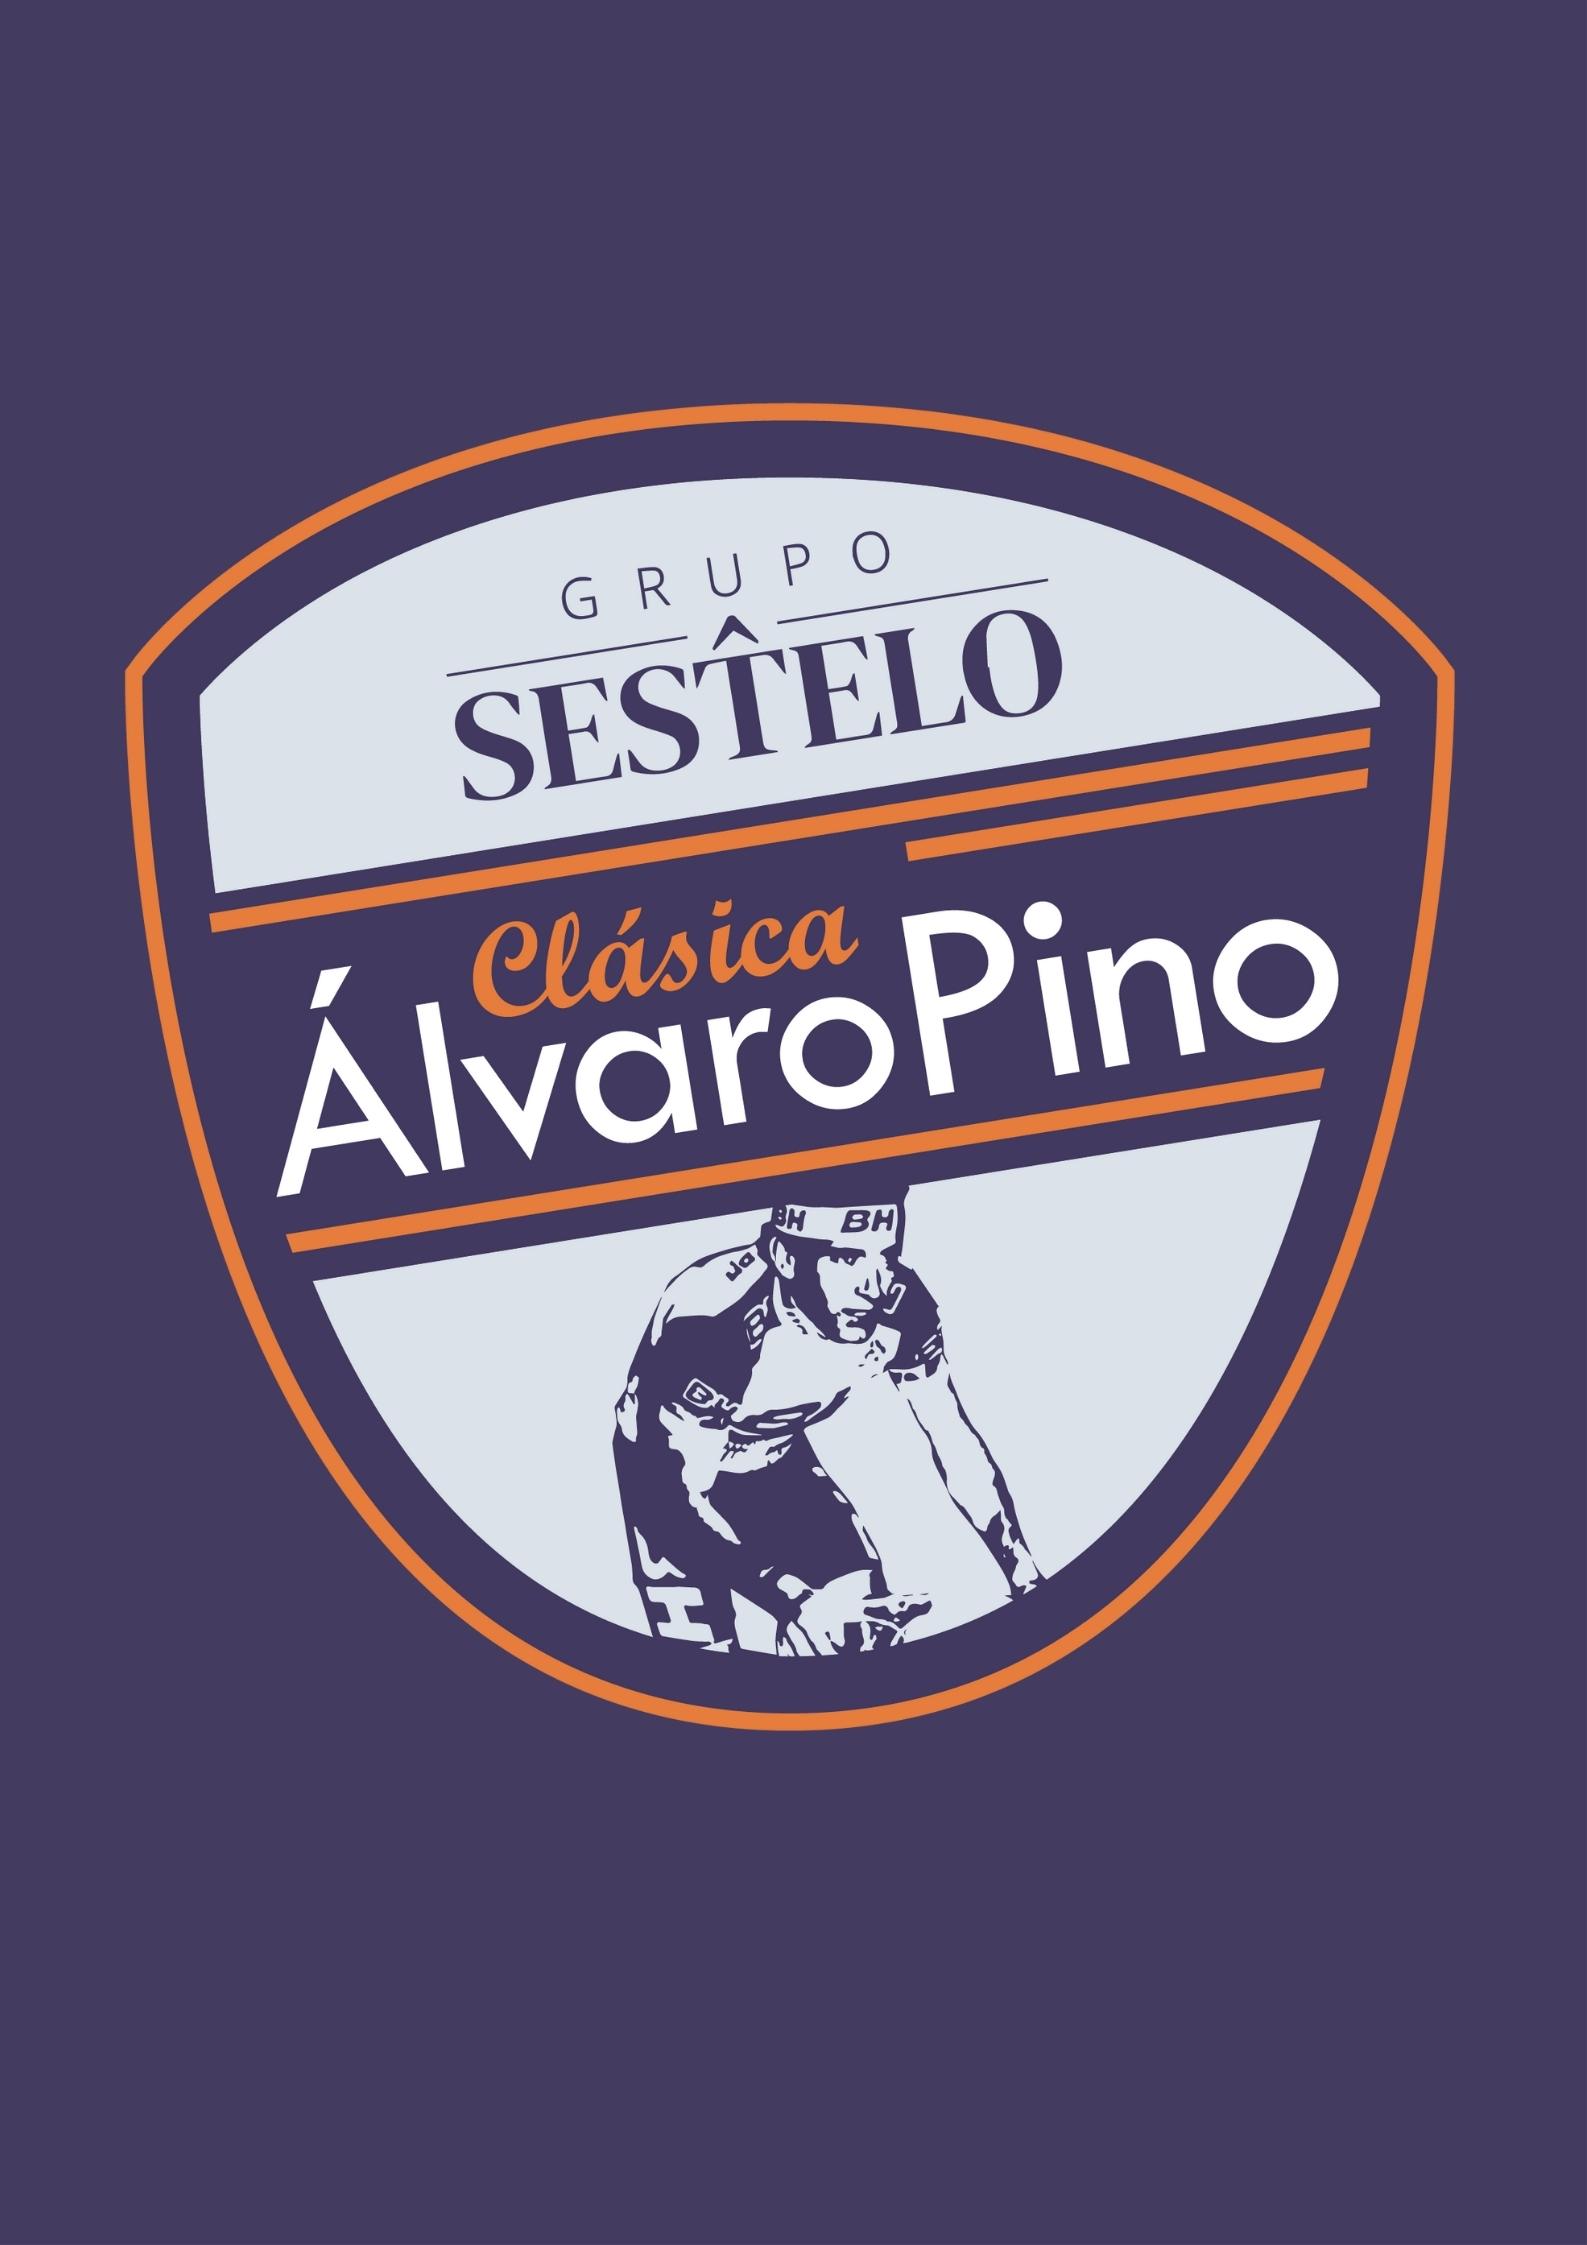 Sestelo - Clásica Álvaro Pino